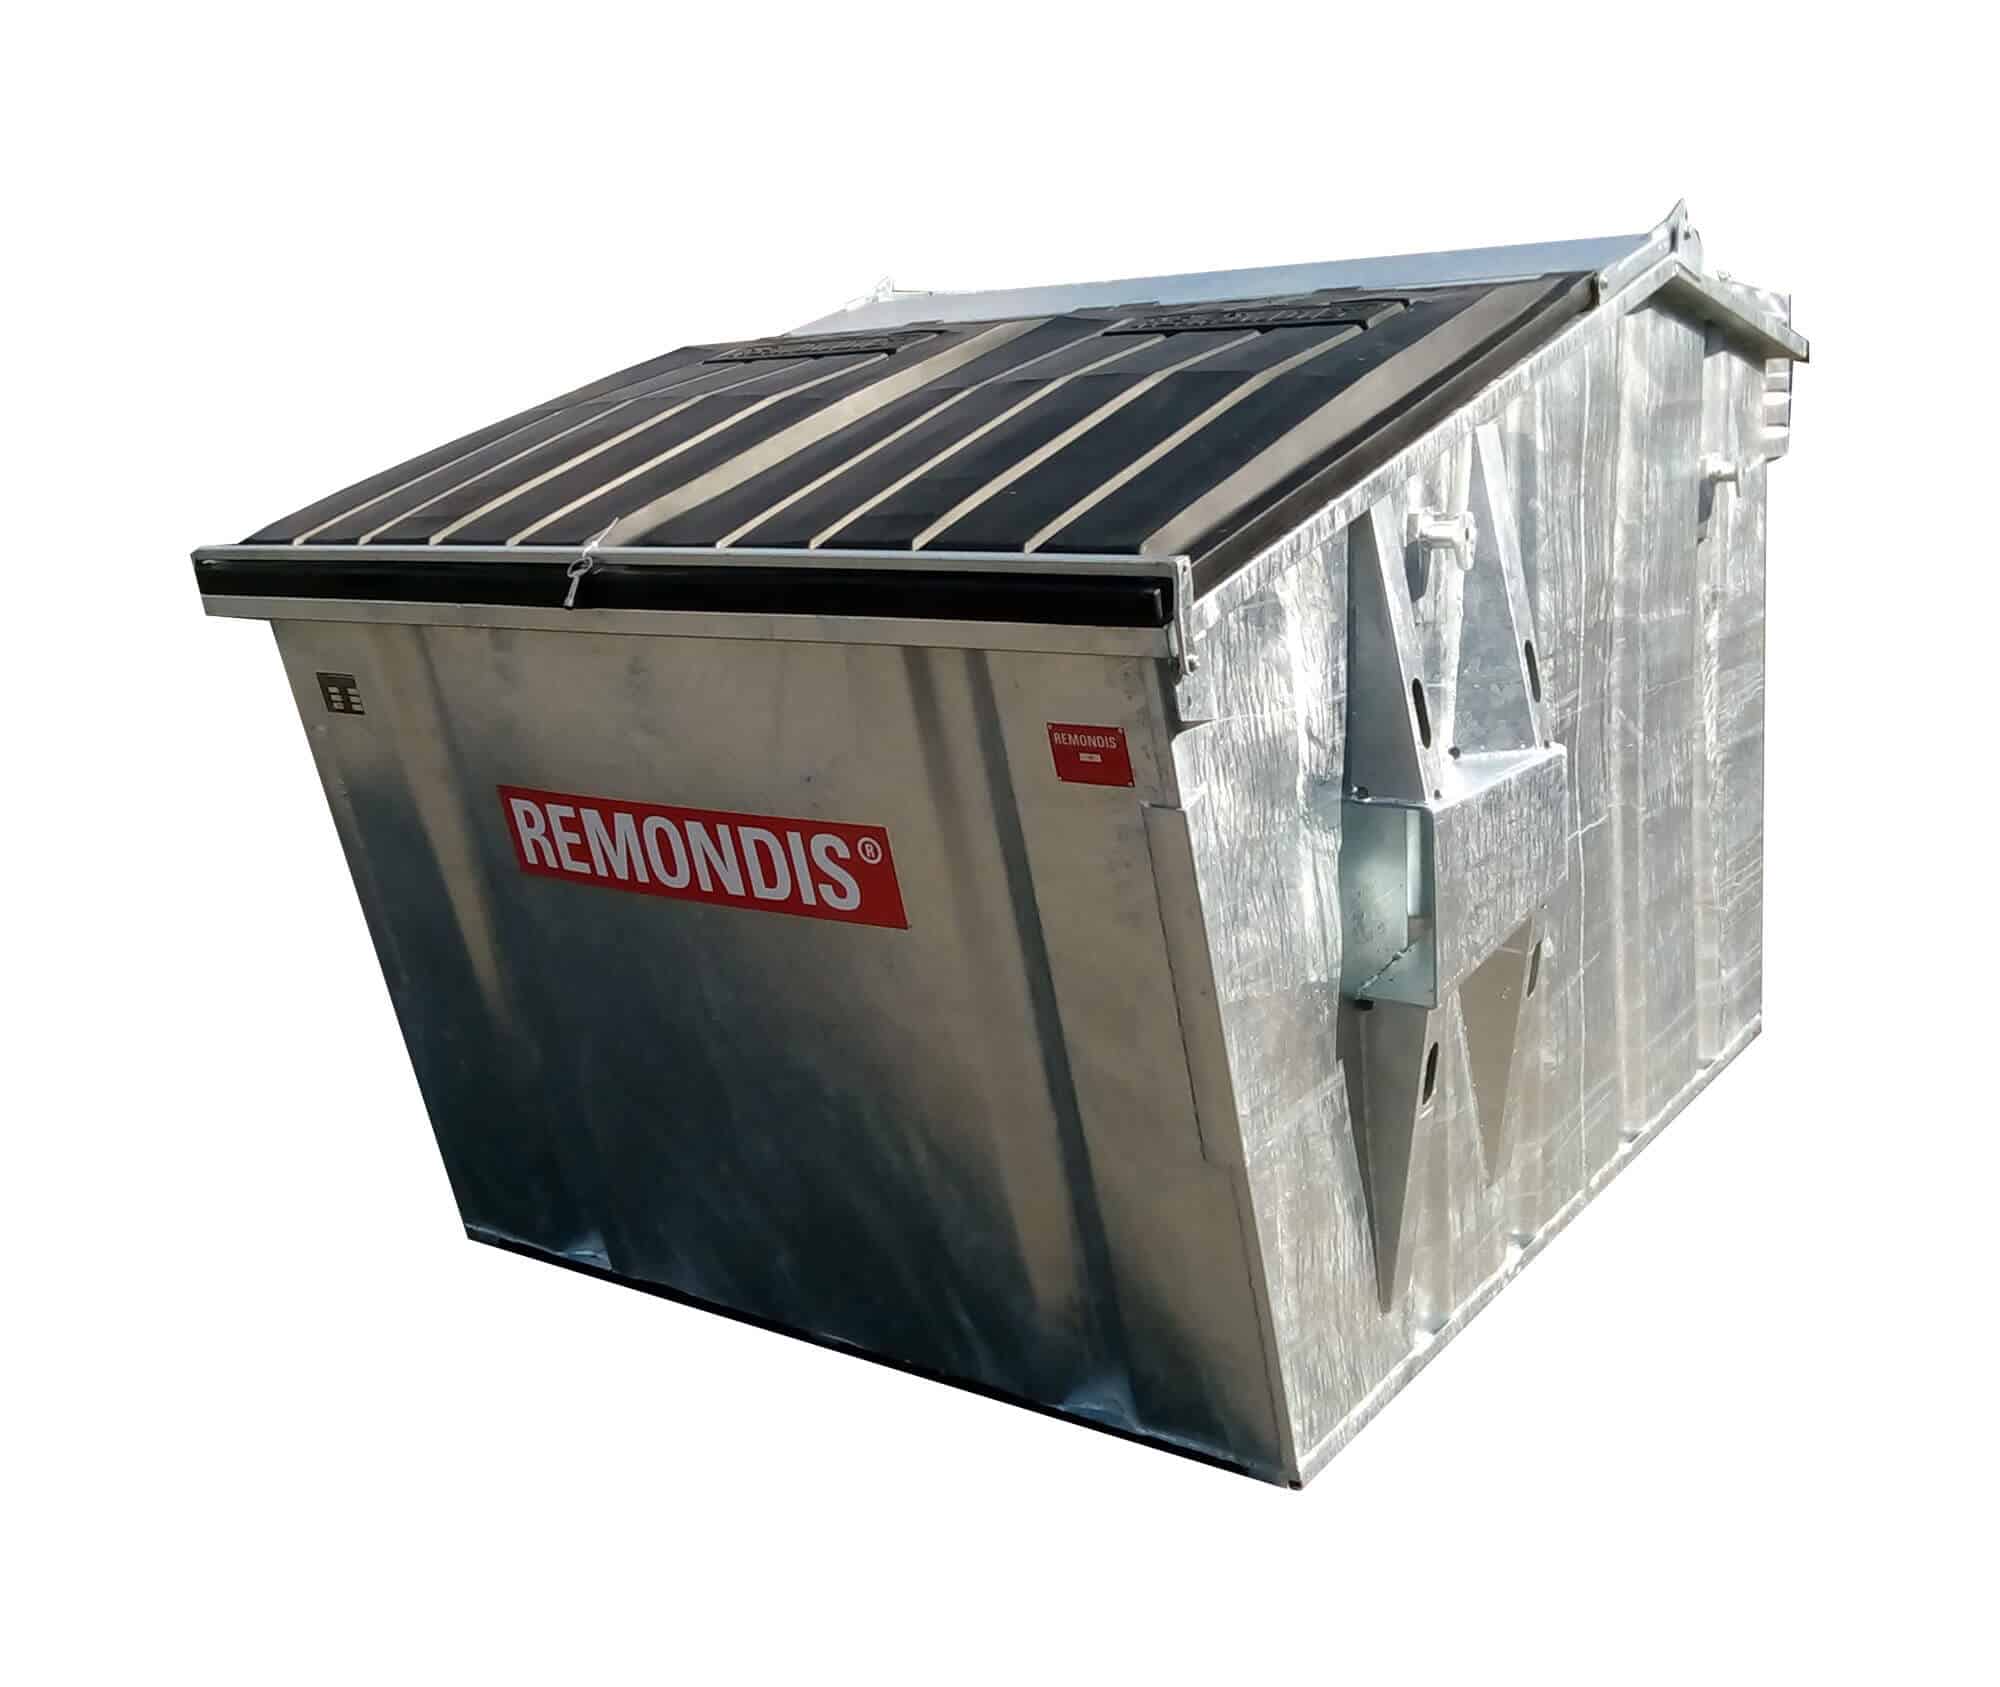 Remondis 8 Yard Waste Container